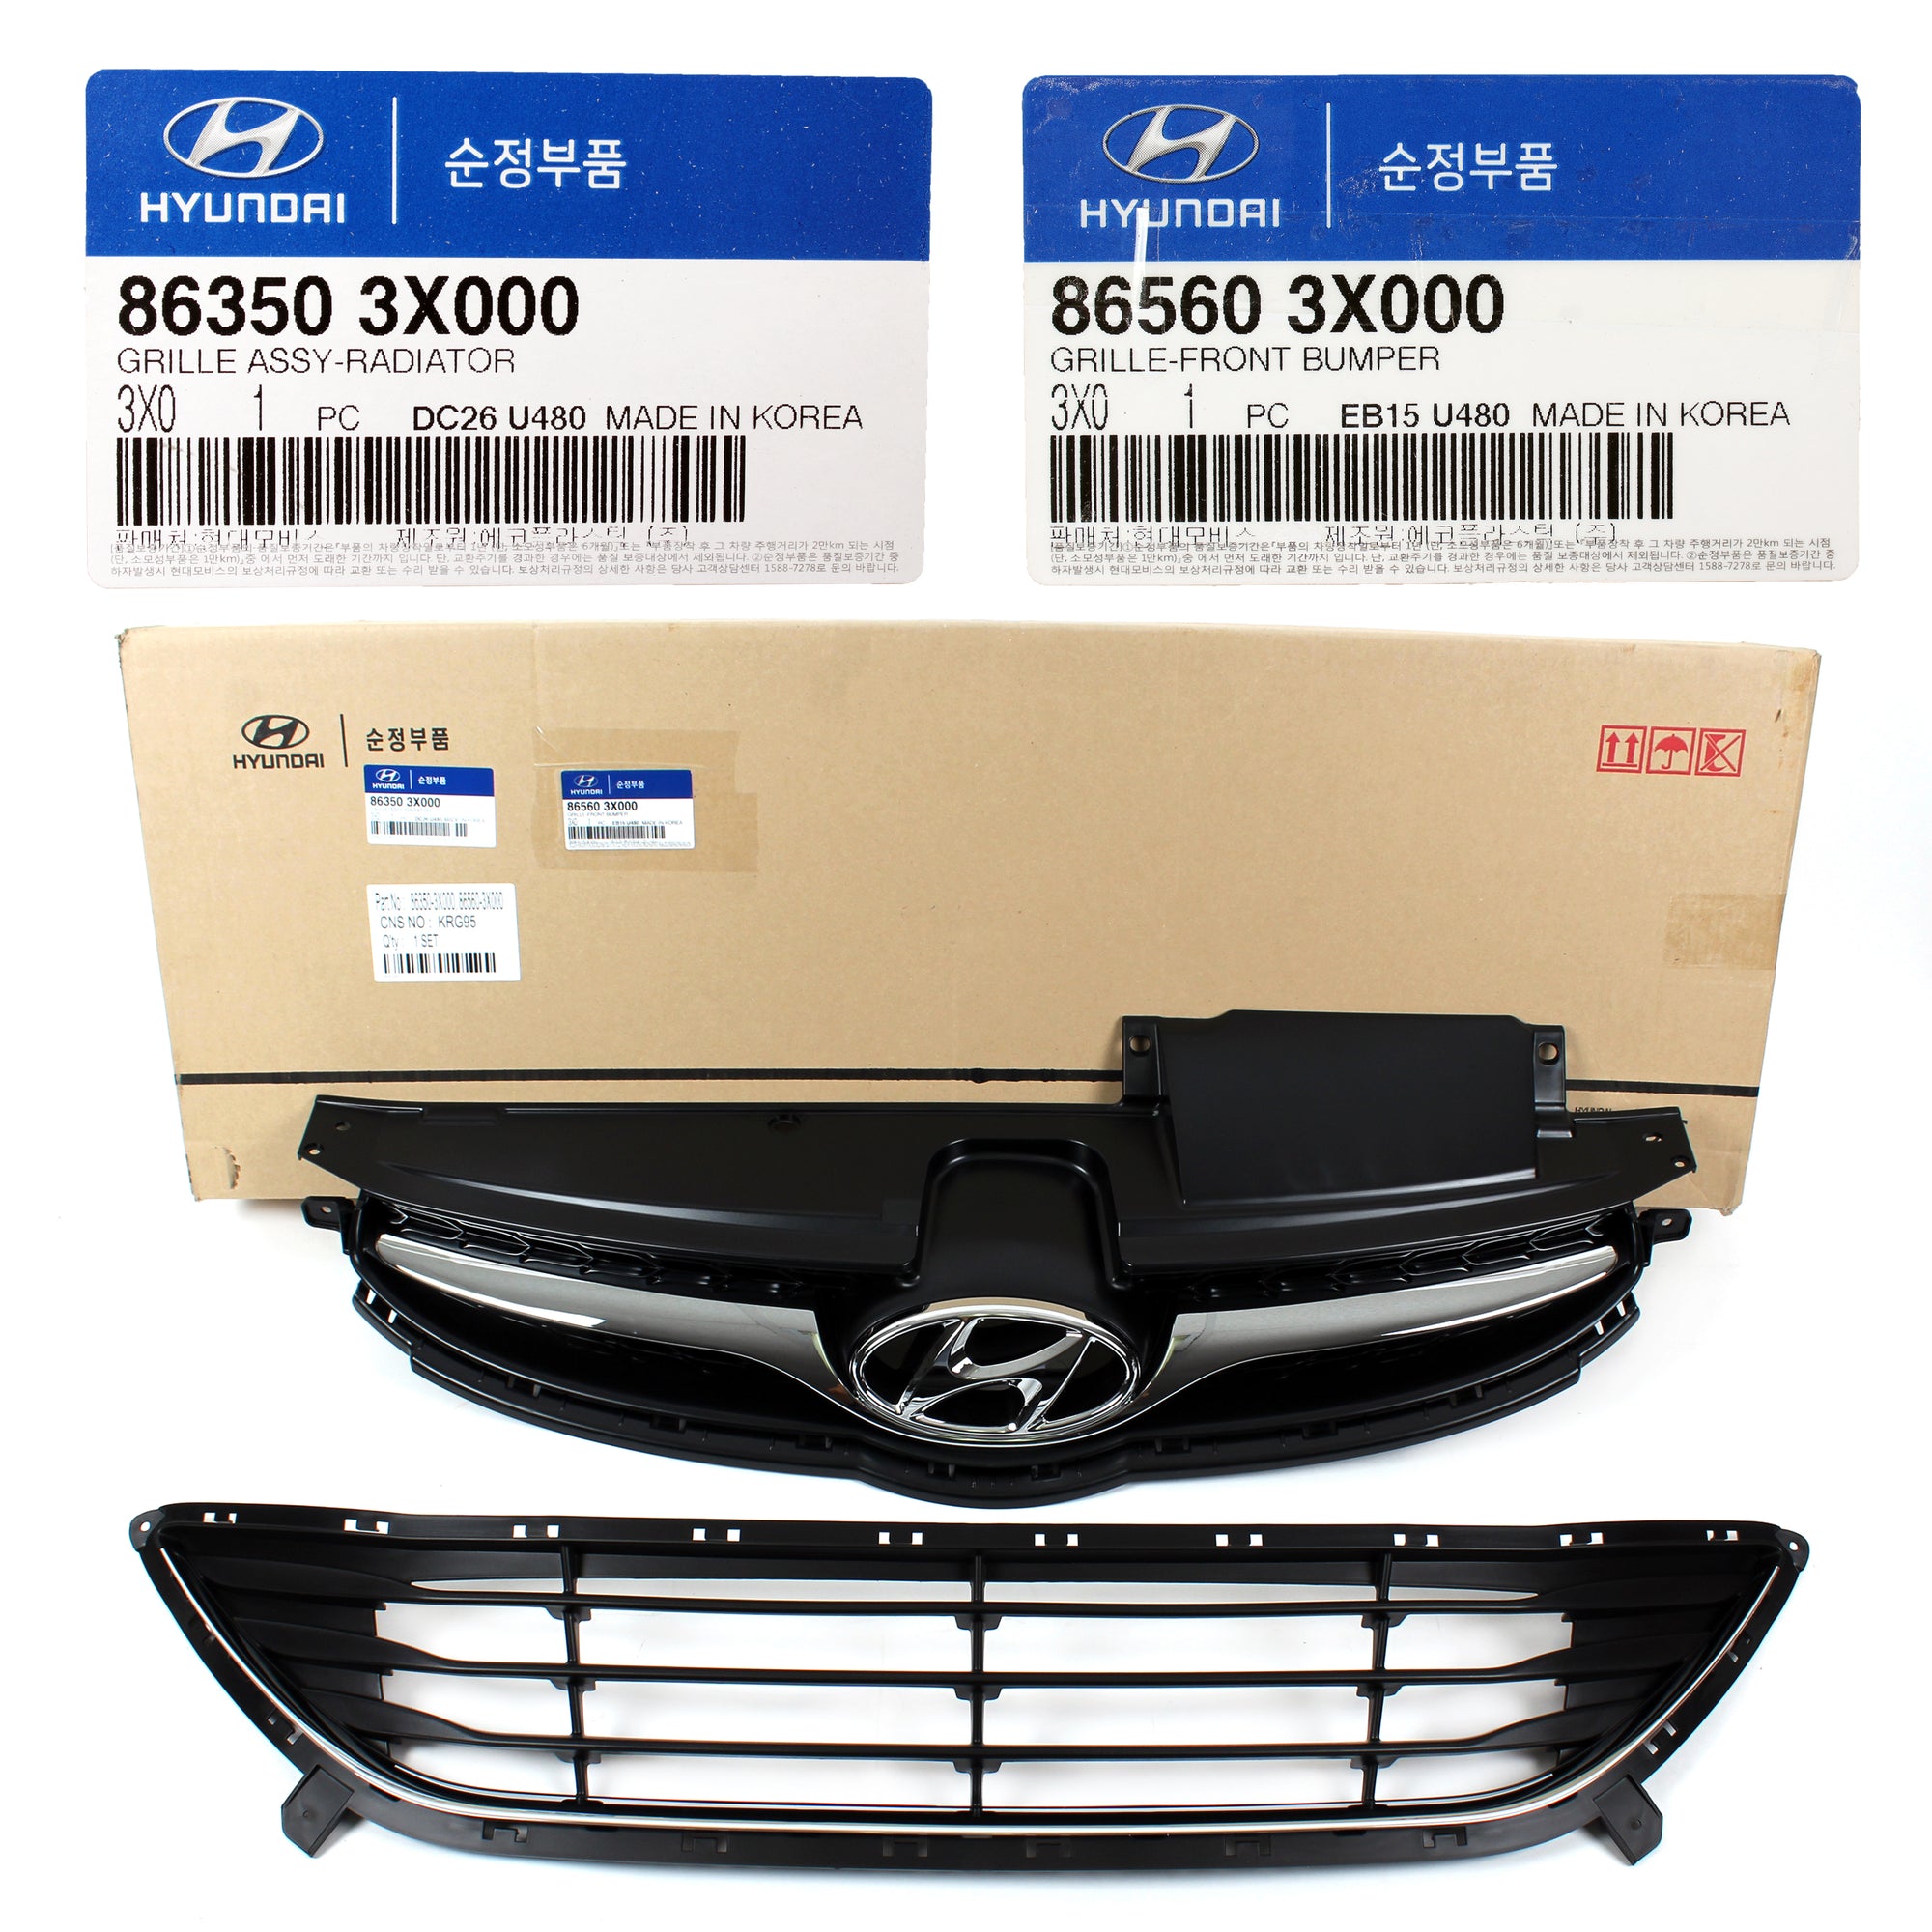 GENUINE Grille Radiator Upper & Lower for 2011-2013 Hyundai Elantra 863503X000